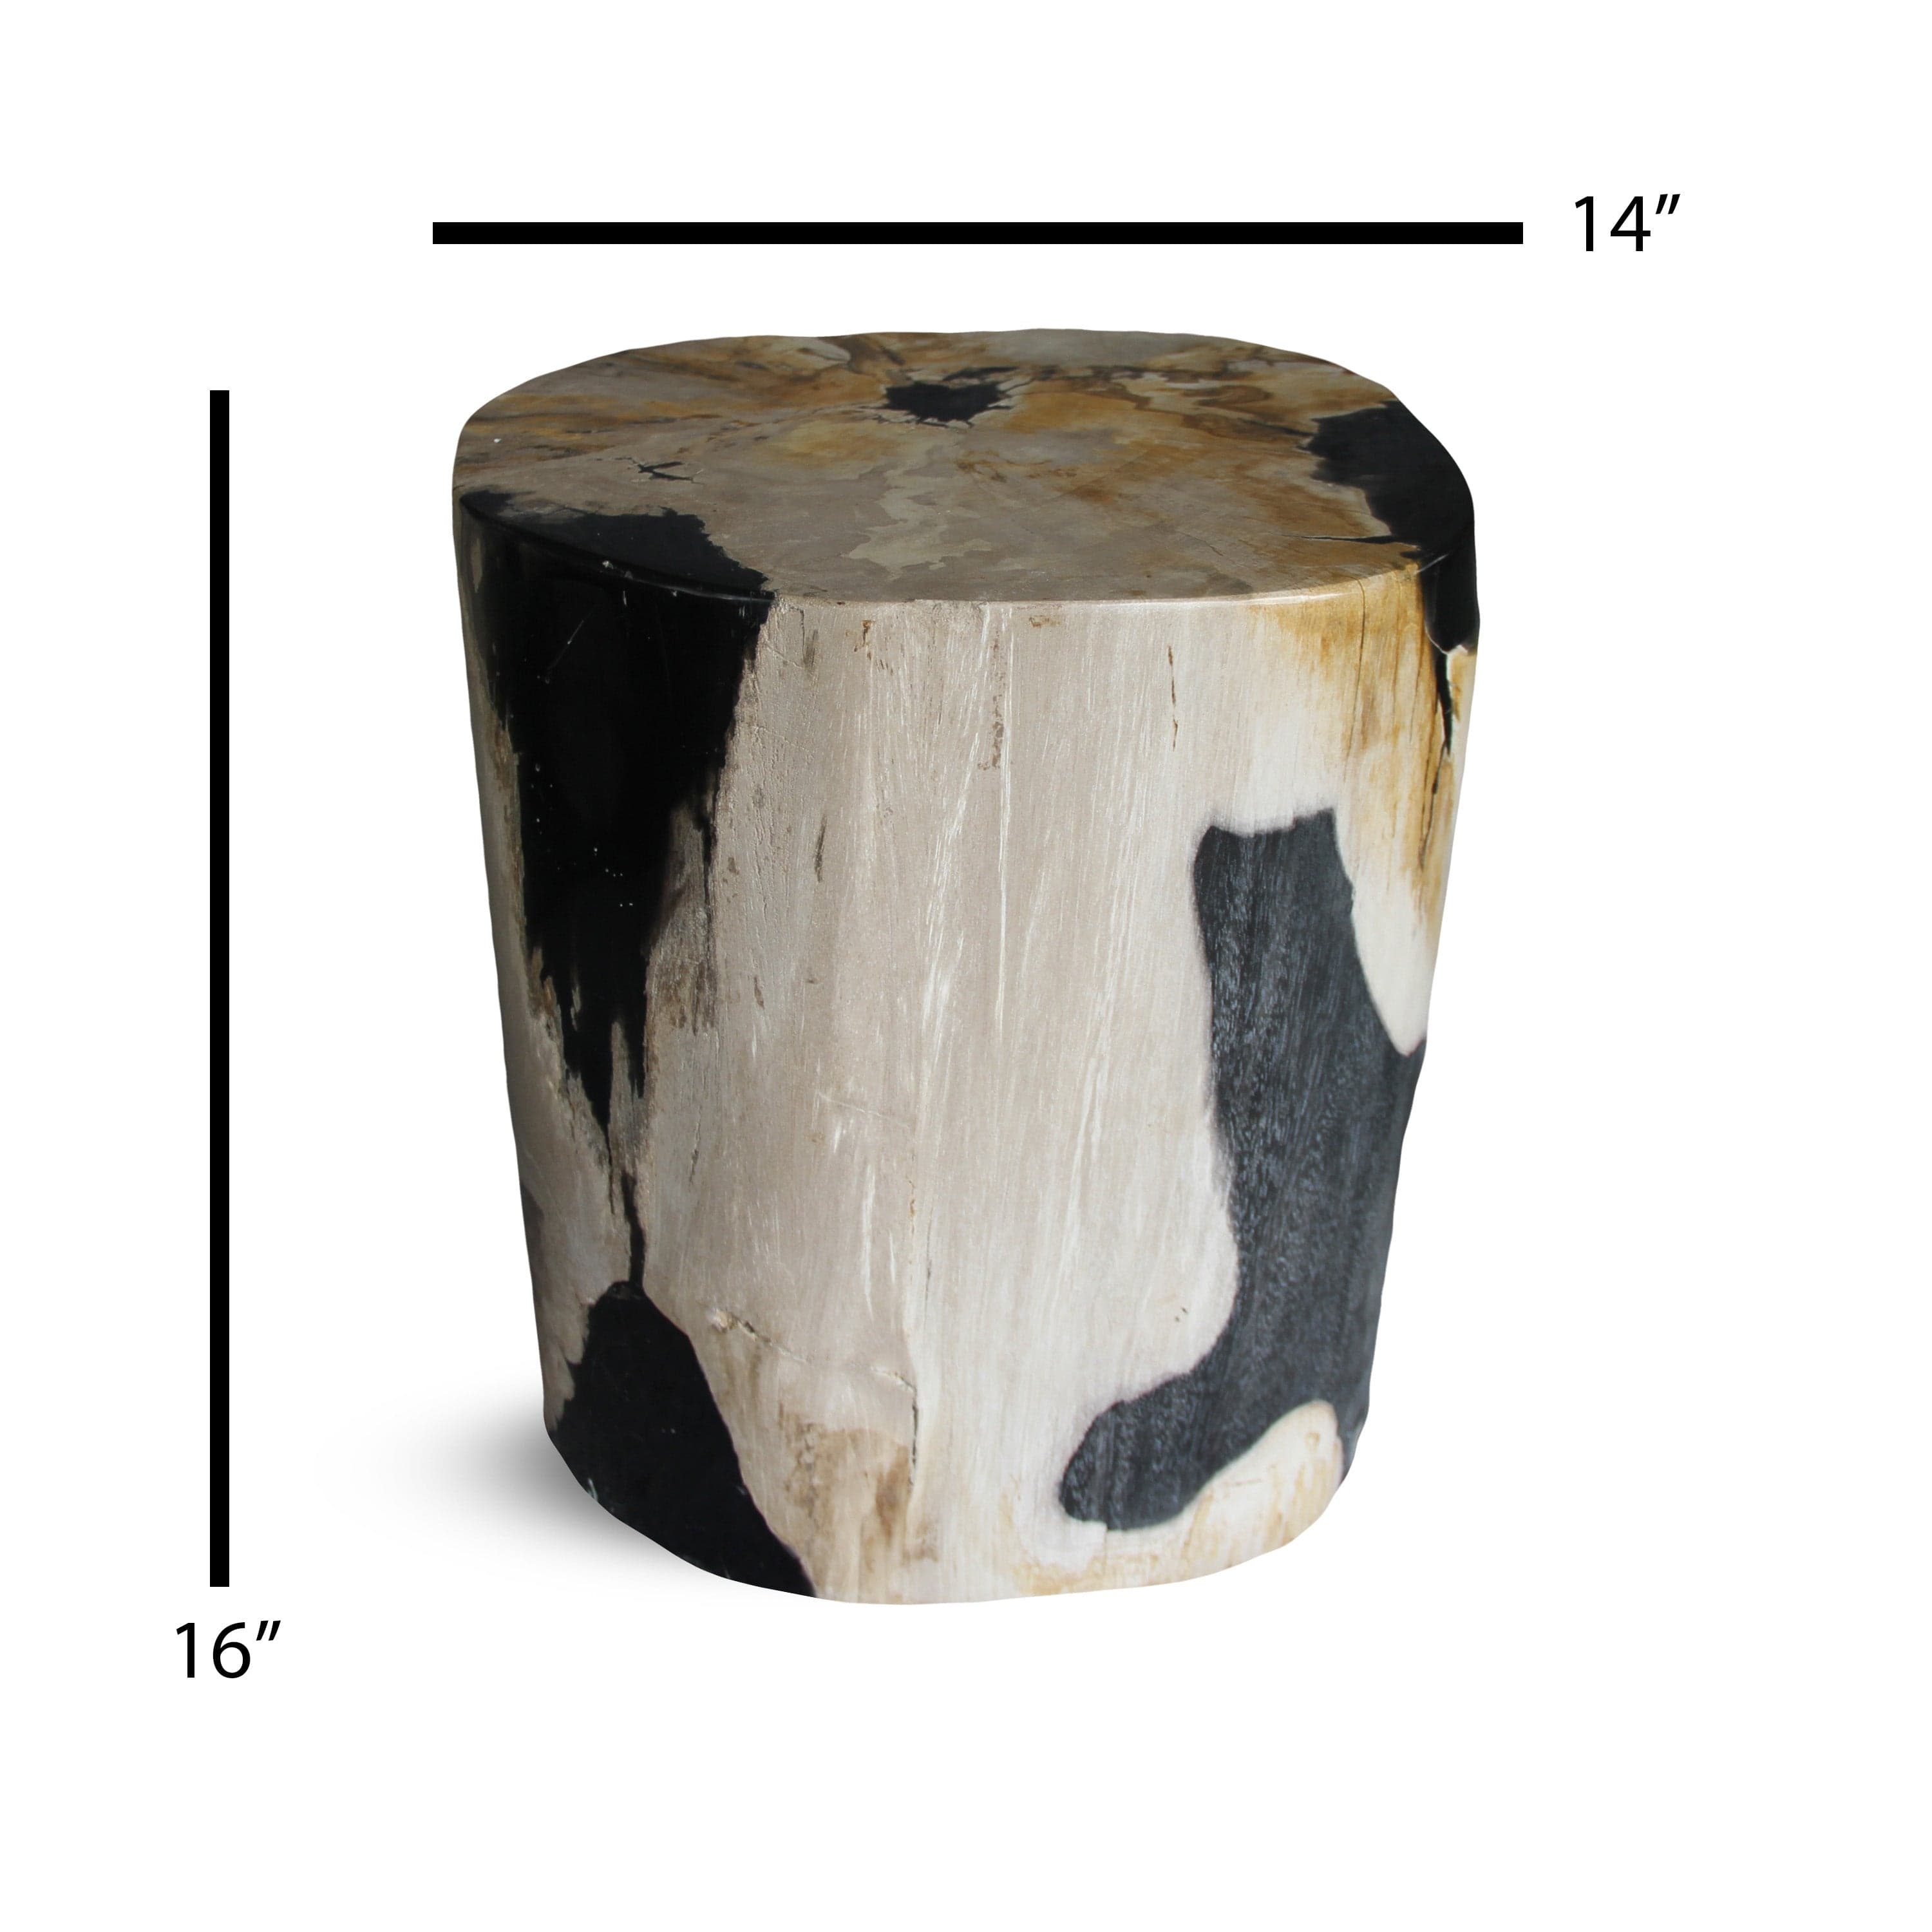 Kalifano Petrified Wood Petrified Wood Round Stump / Stool from Indonesia - 16" / 198 lbs PWS3600.004